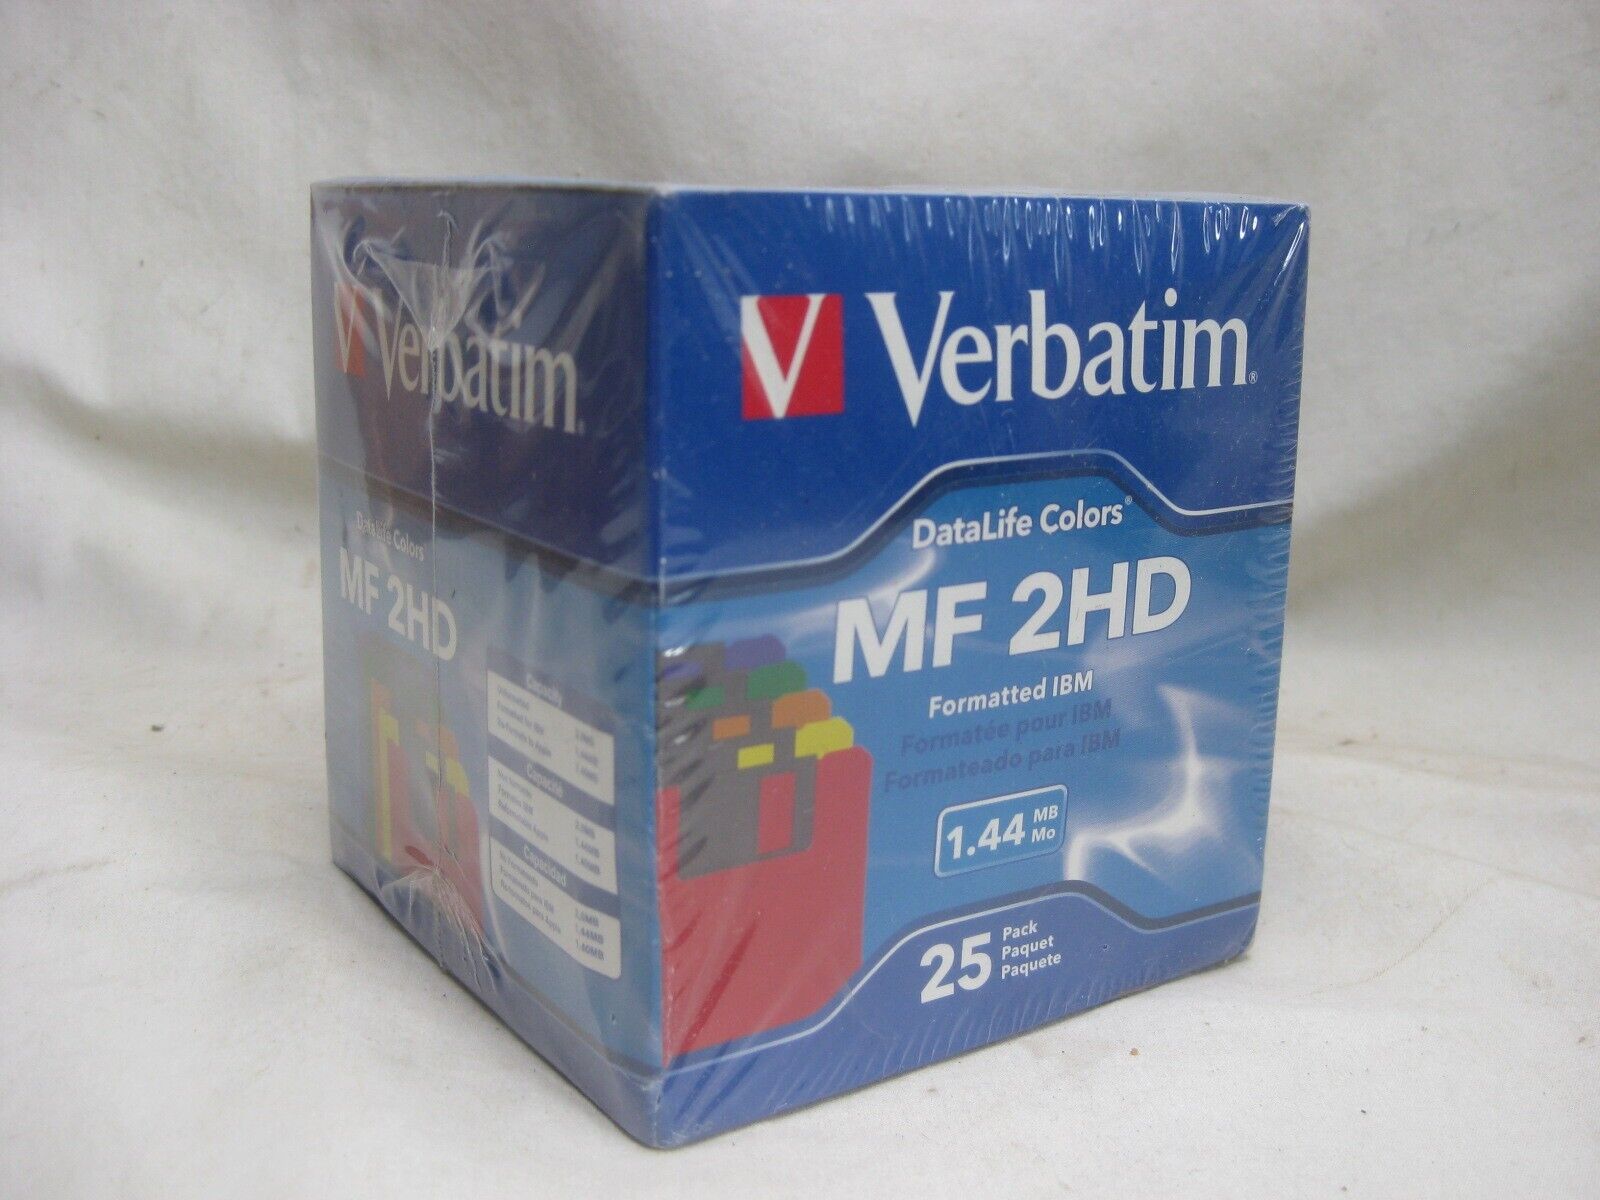 25 Pack Verbatim DataLife Colors MF 2HD Formatted IBM 1.44MB vintage memory nos